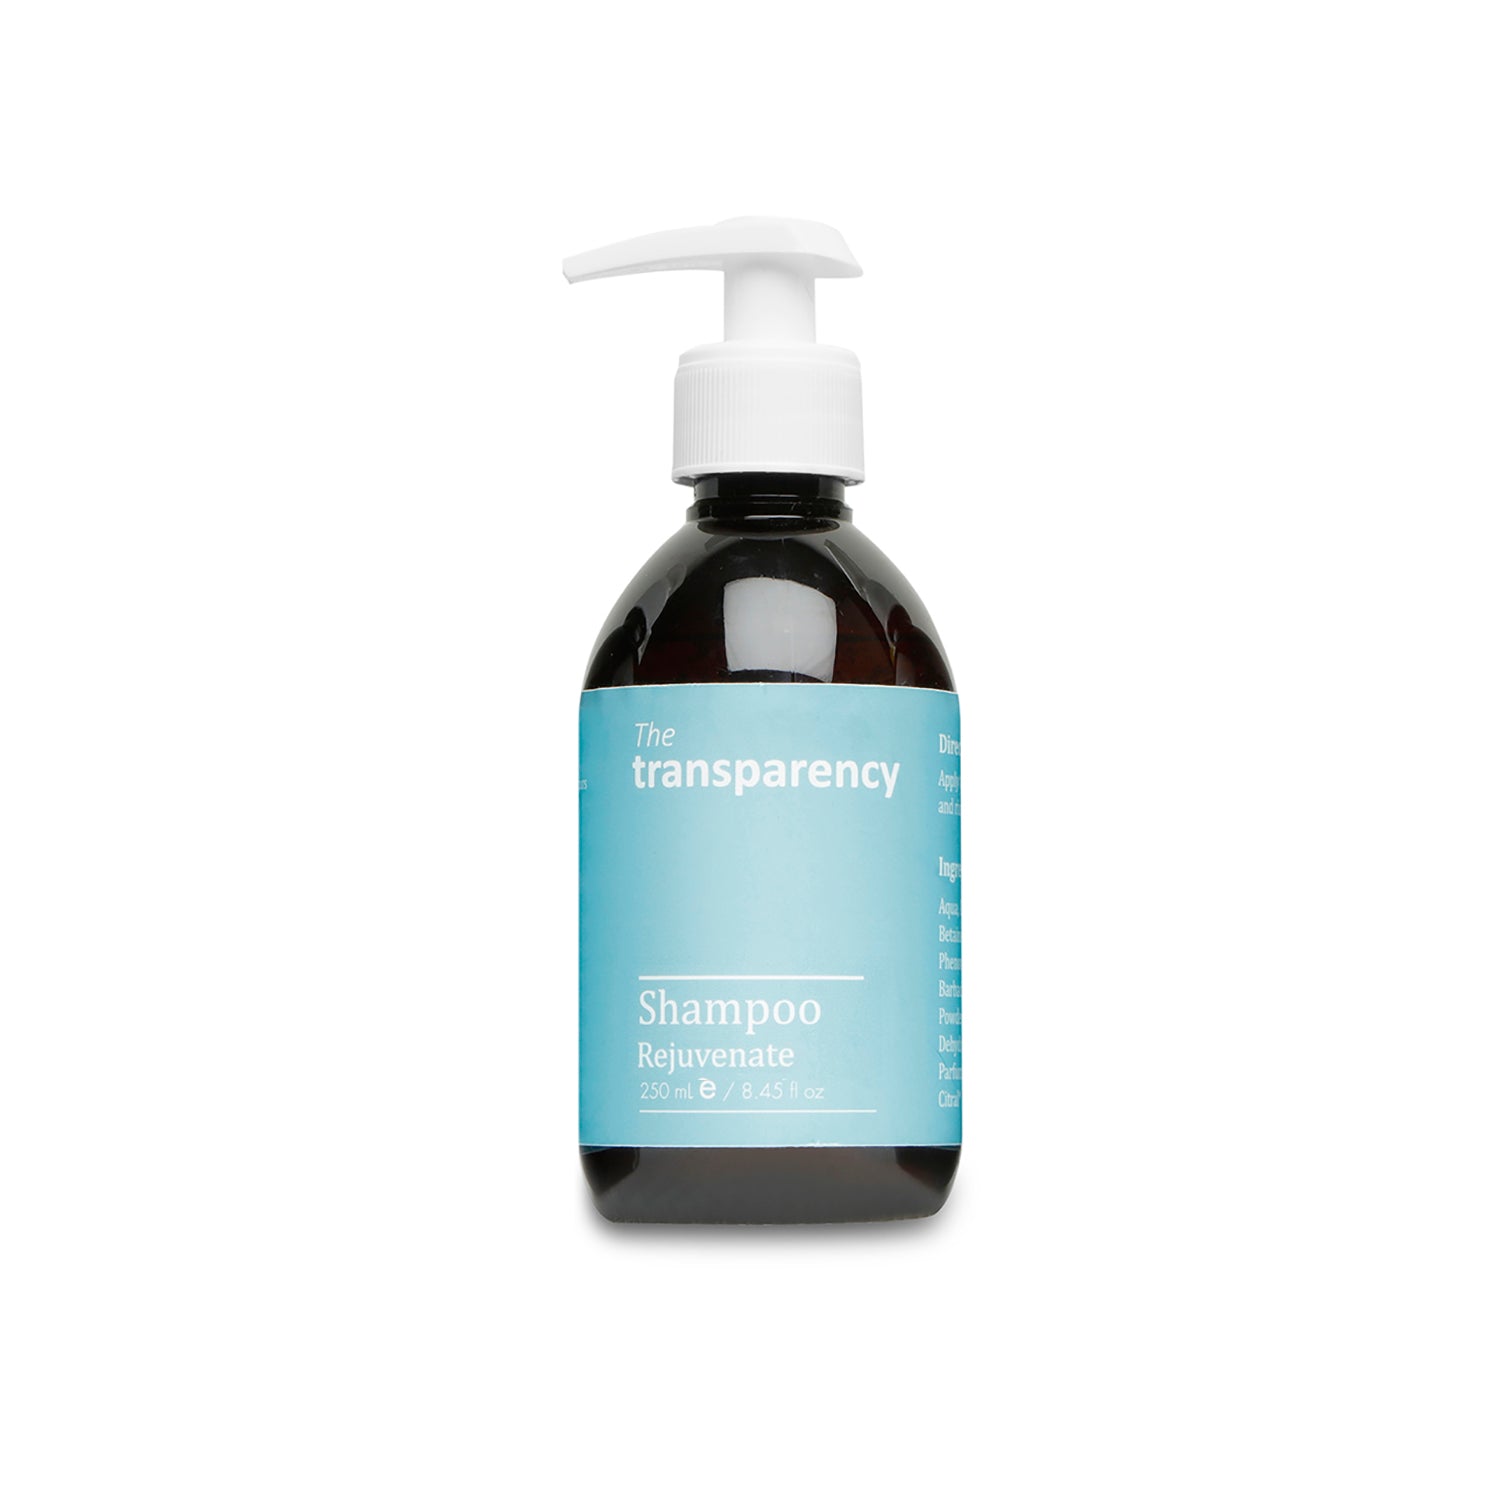 Rejuvenate Hair Shampoo - The transparency